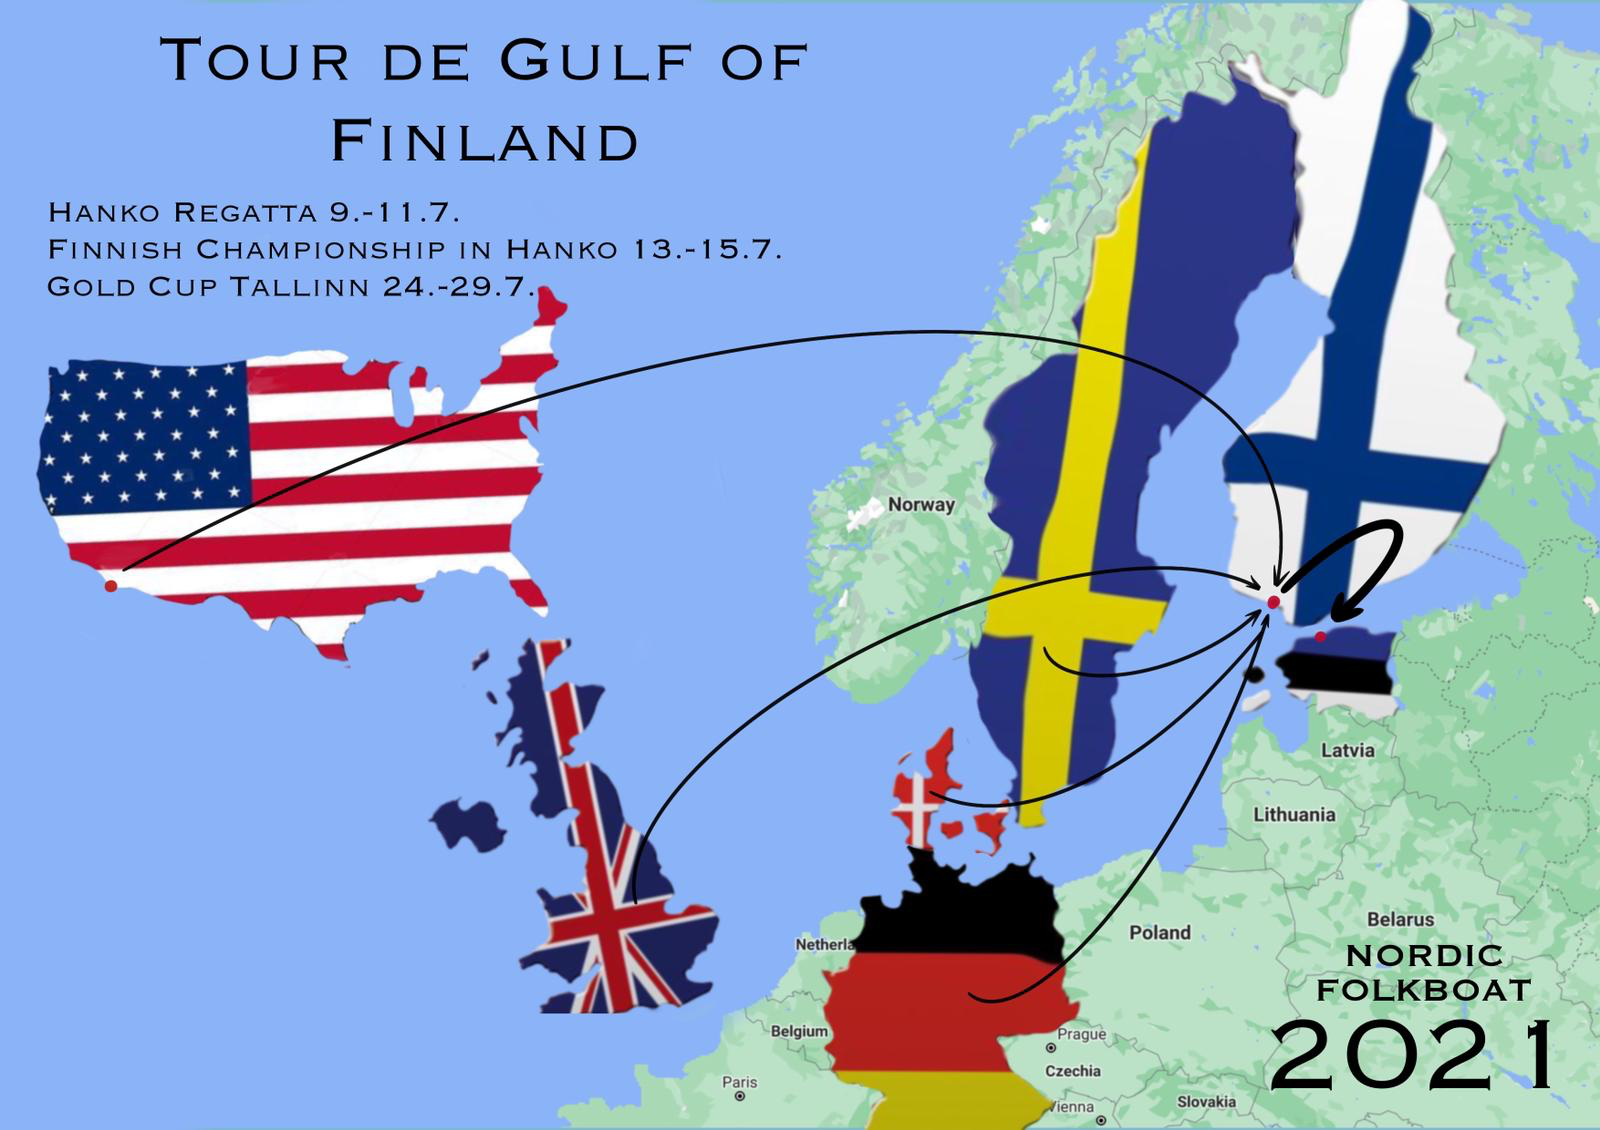 2021_Tour_de_Gulf_of_Finland_Folkboat.png